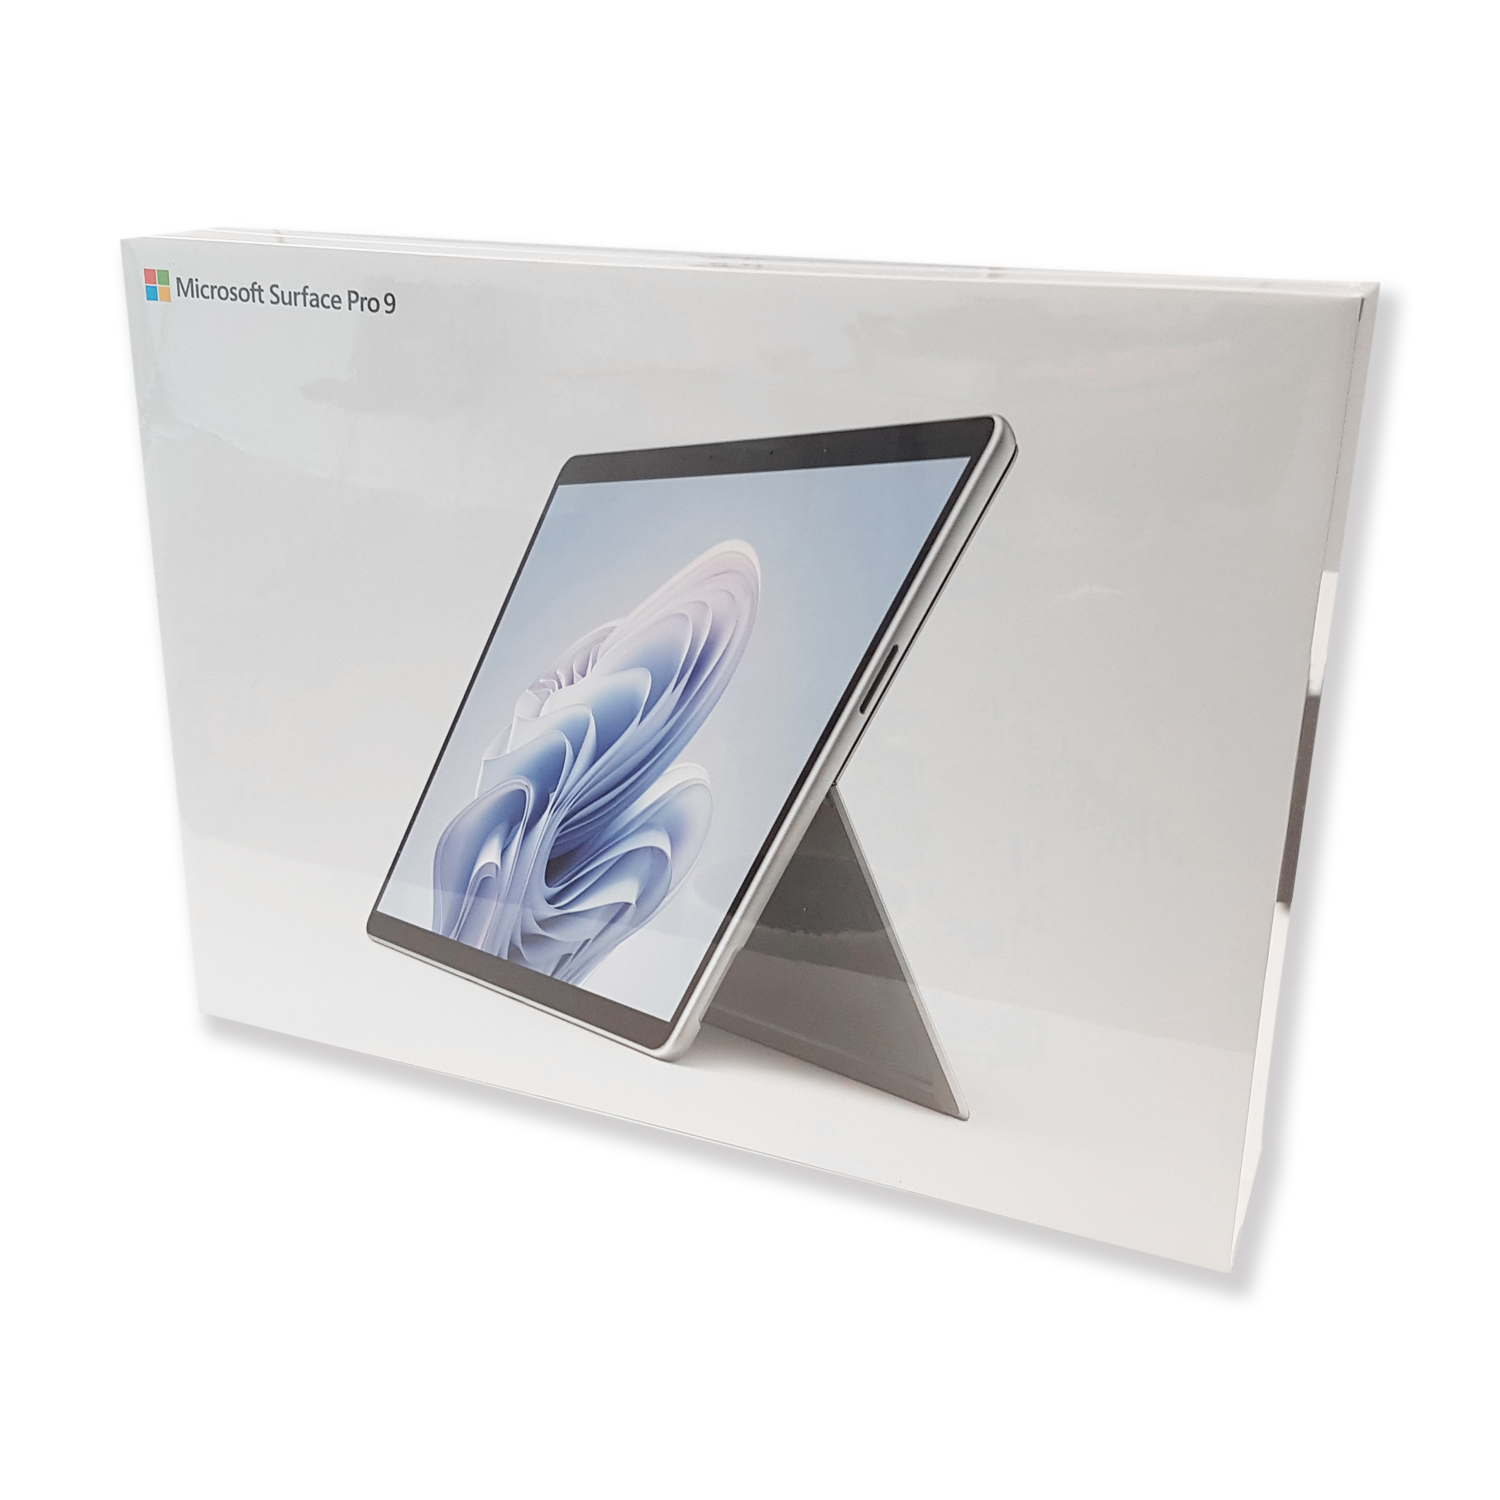 Microsoft Surface Pro 9 i5/256 GB 16 GB RAM 2 in 1 Tablet - platin von Microsoft